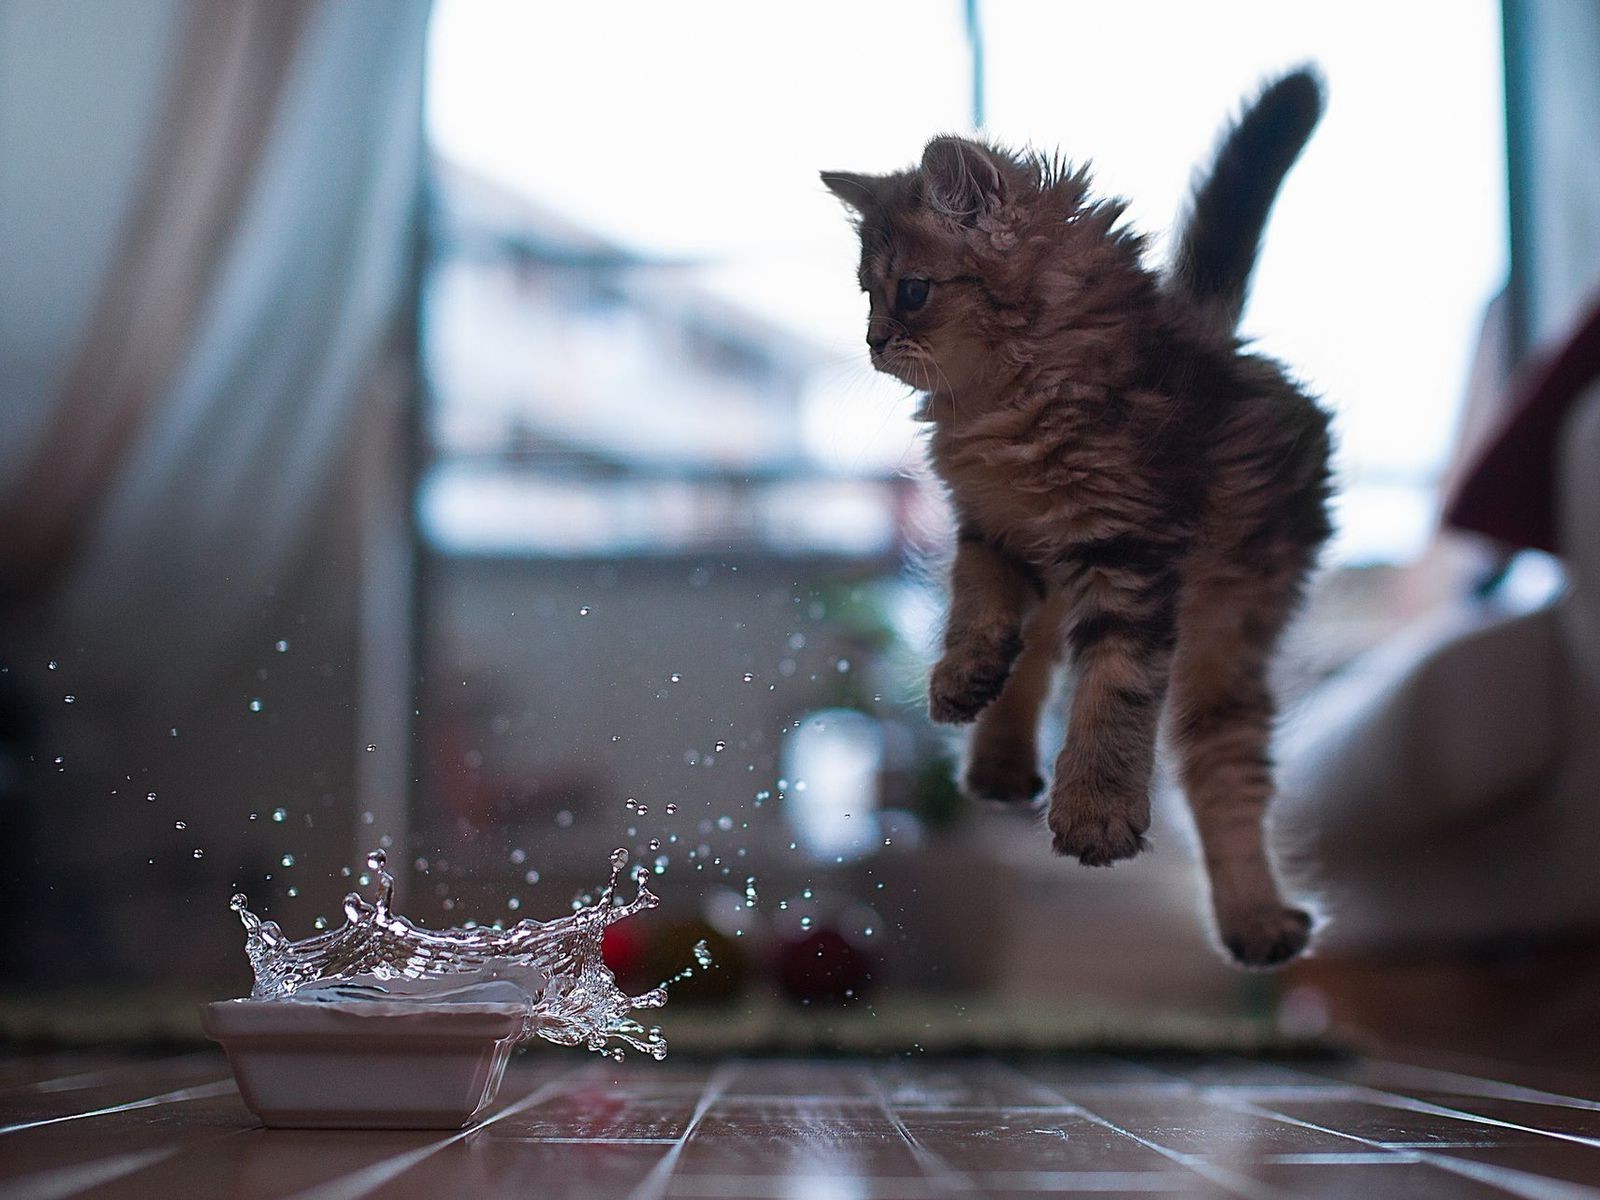 Animals Cat Jumping Splashes Water Wooden Surface Ben Torode